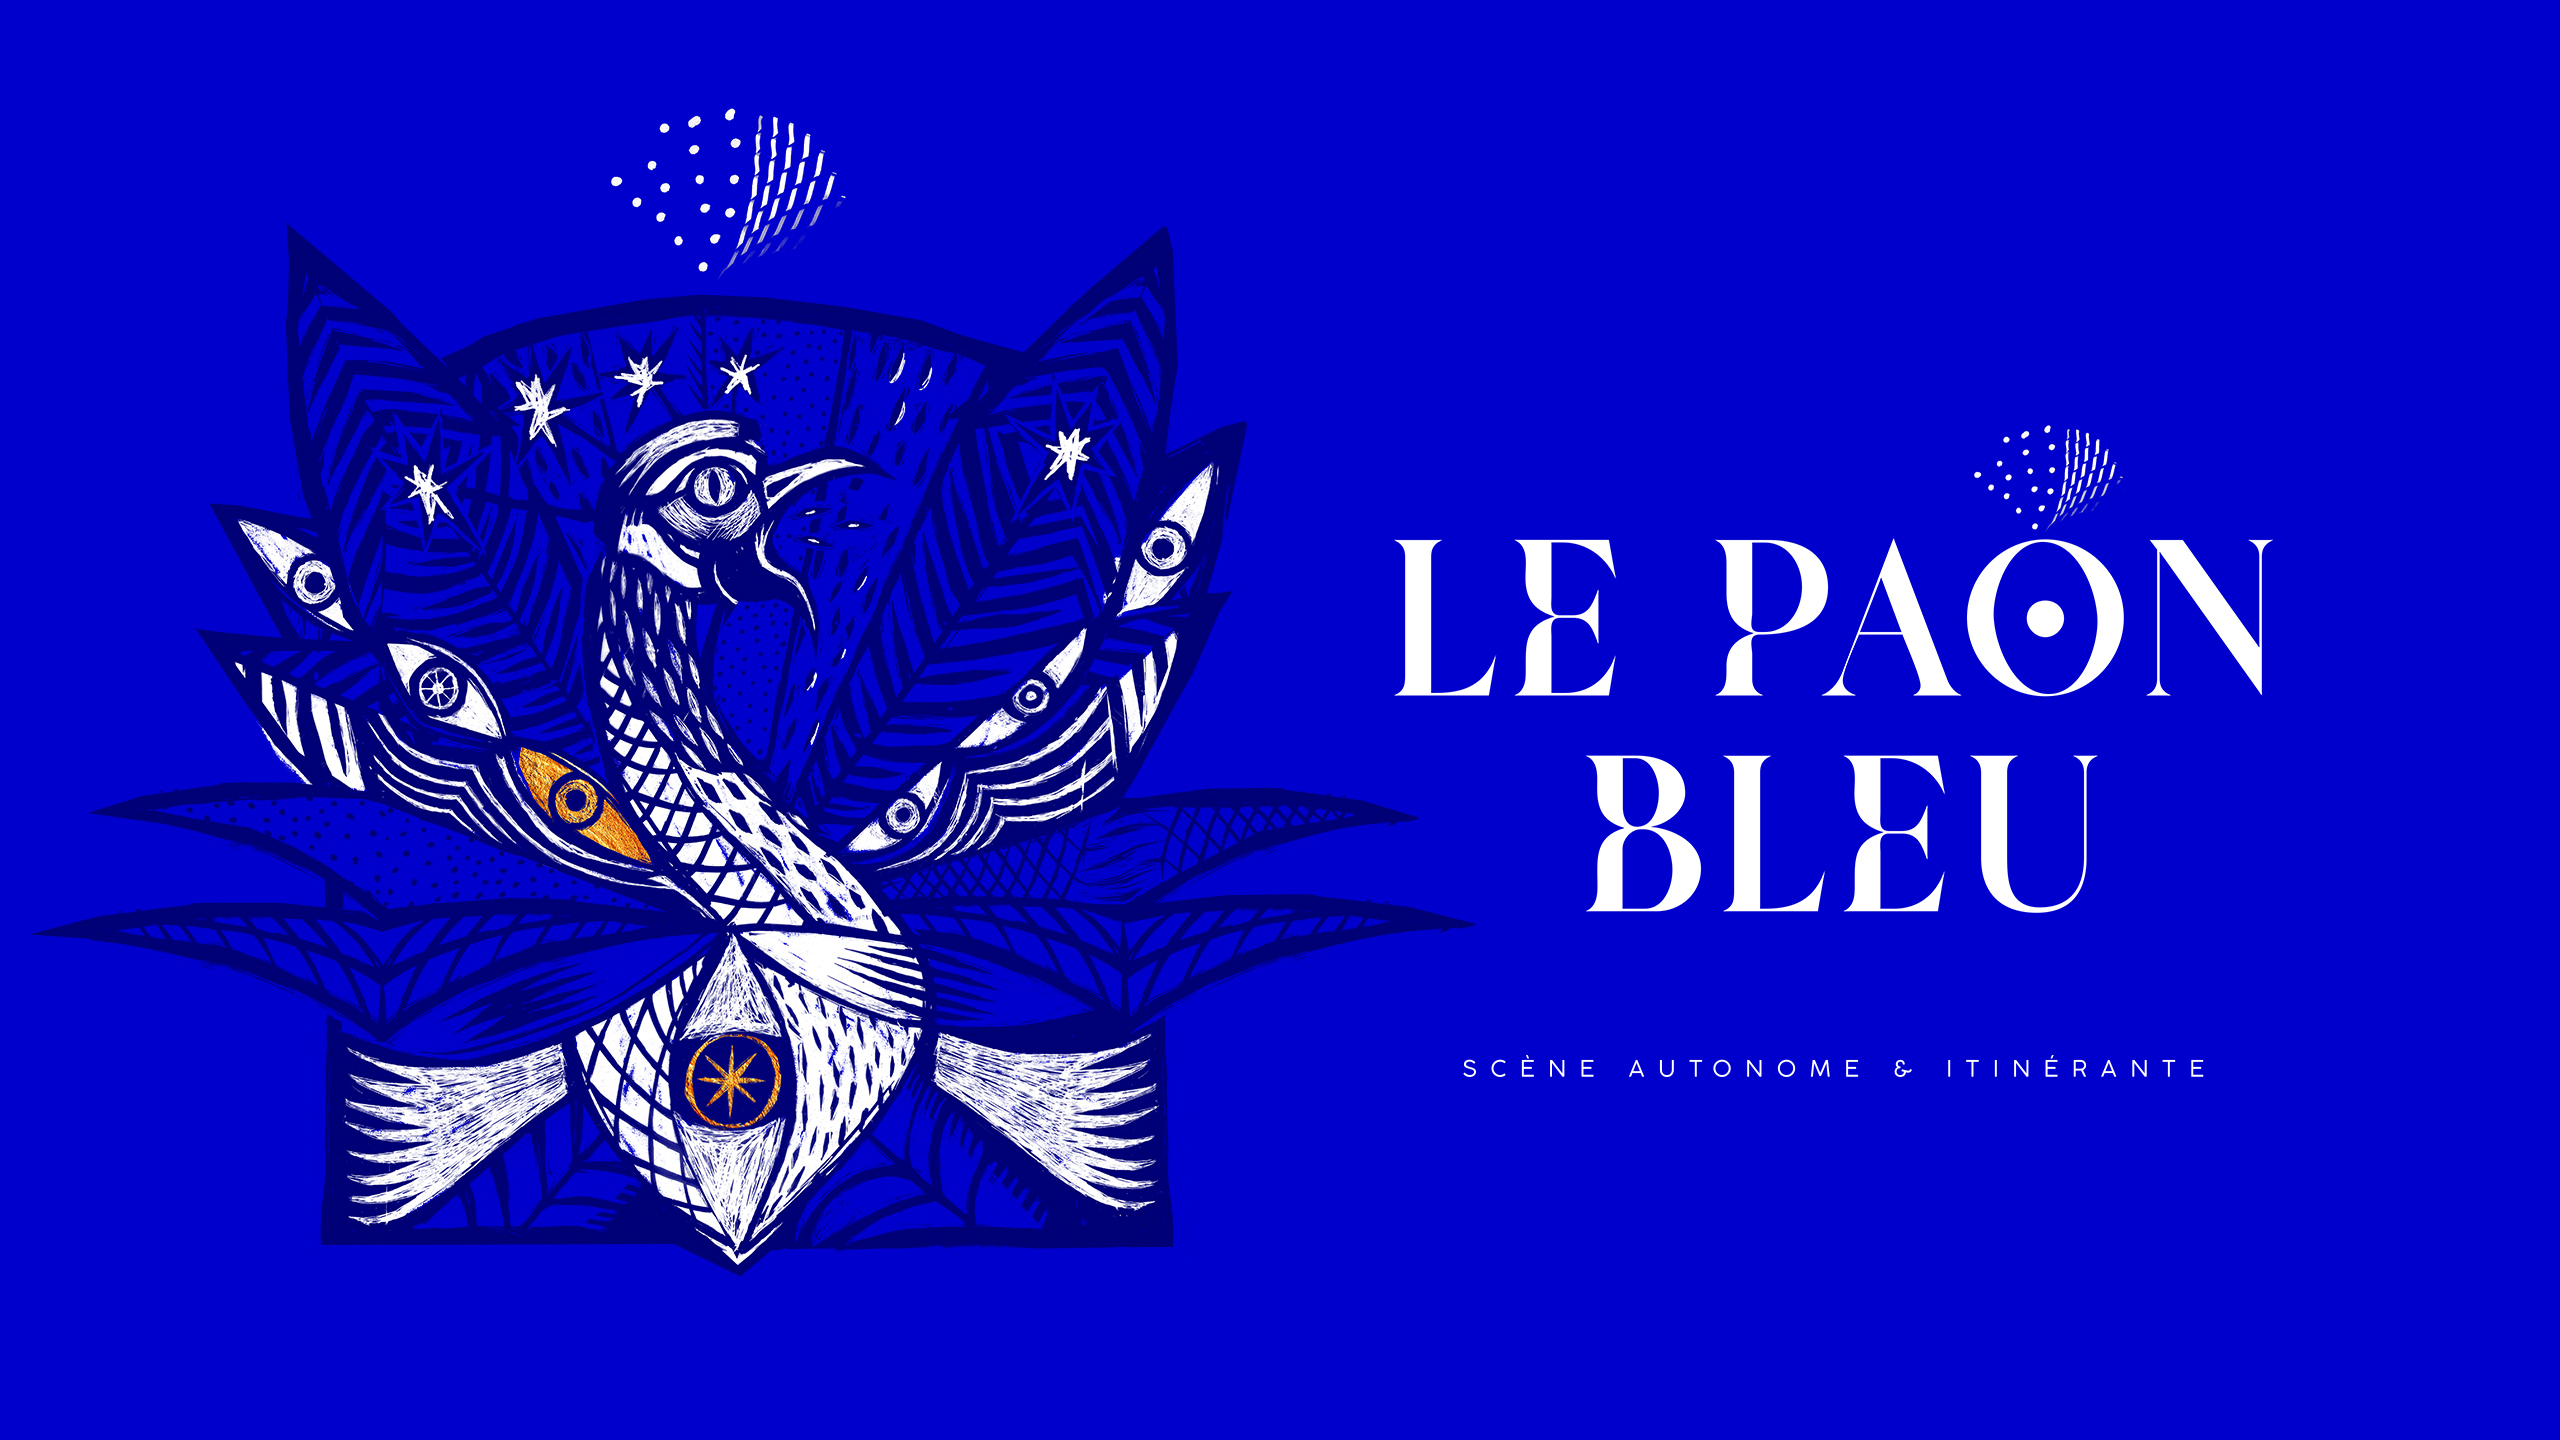 Sortie de Paon : Delphine Coutant + Najoua Darwiche + Cécile Gravot